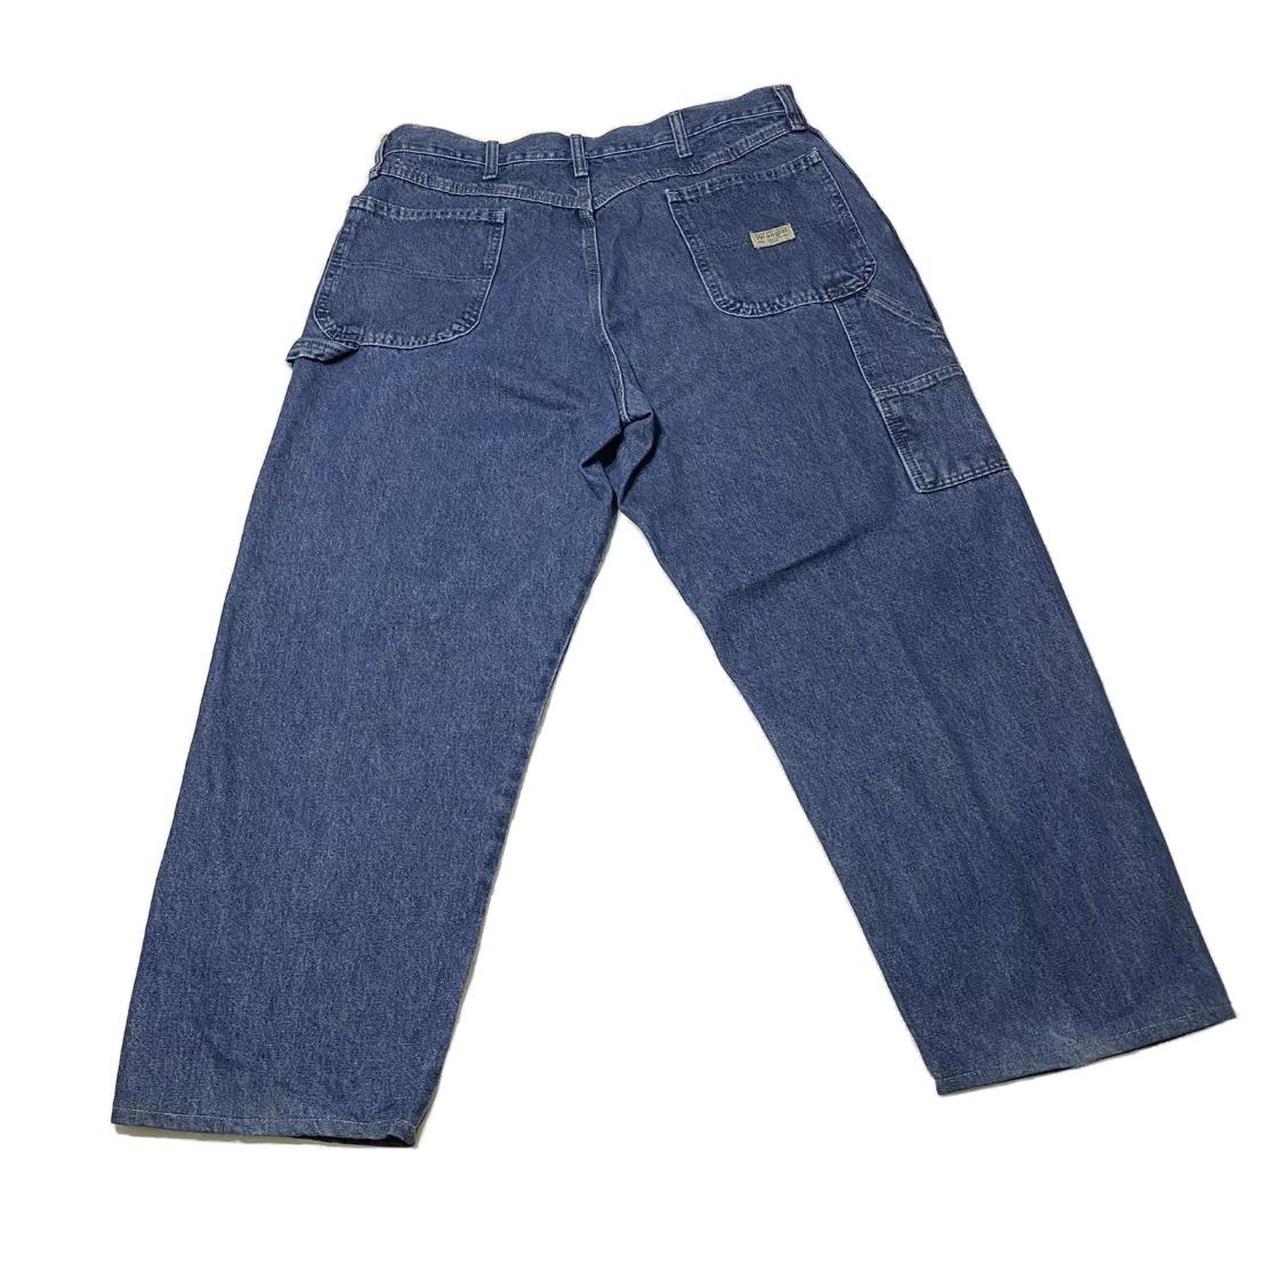 Product Image 3 - Vintage Wrangler Jeans Carpenter Pants